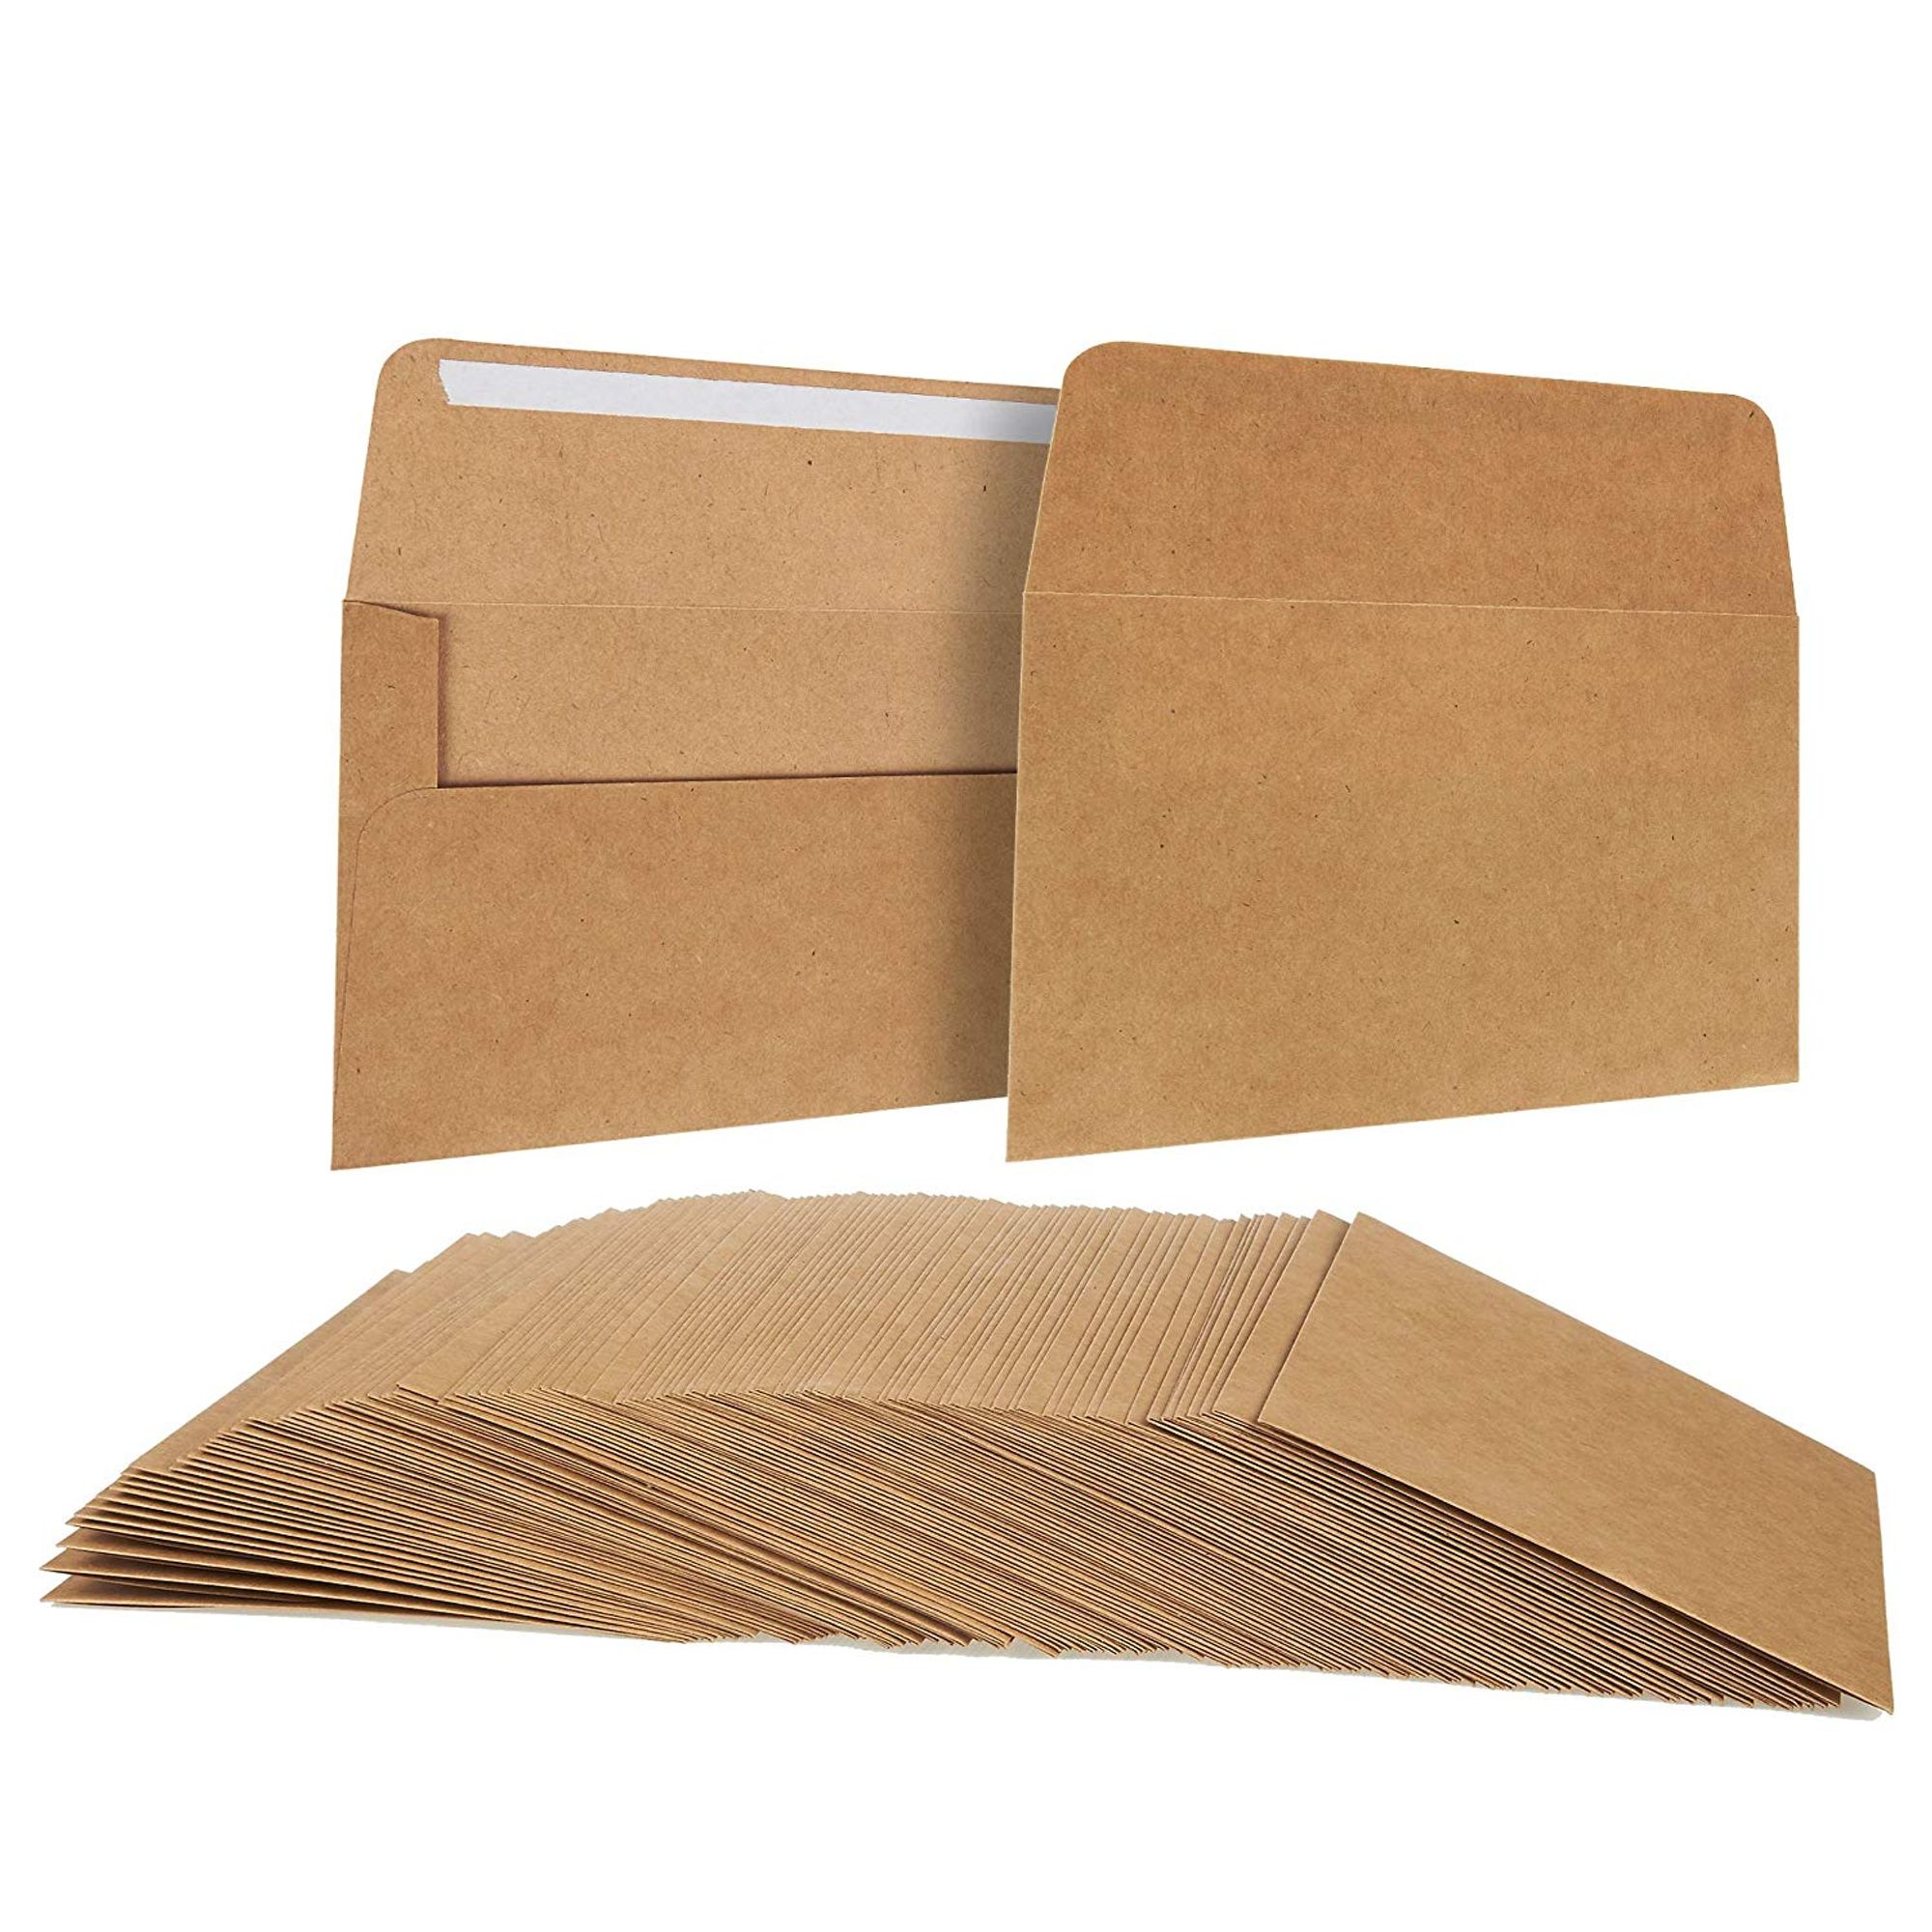 A6 Envelopes Bulk - 100-Count A6 Invitation Envelopes, Kraft Paper ...